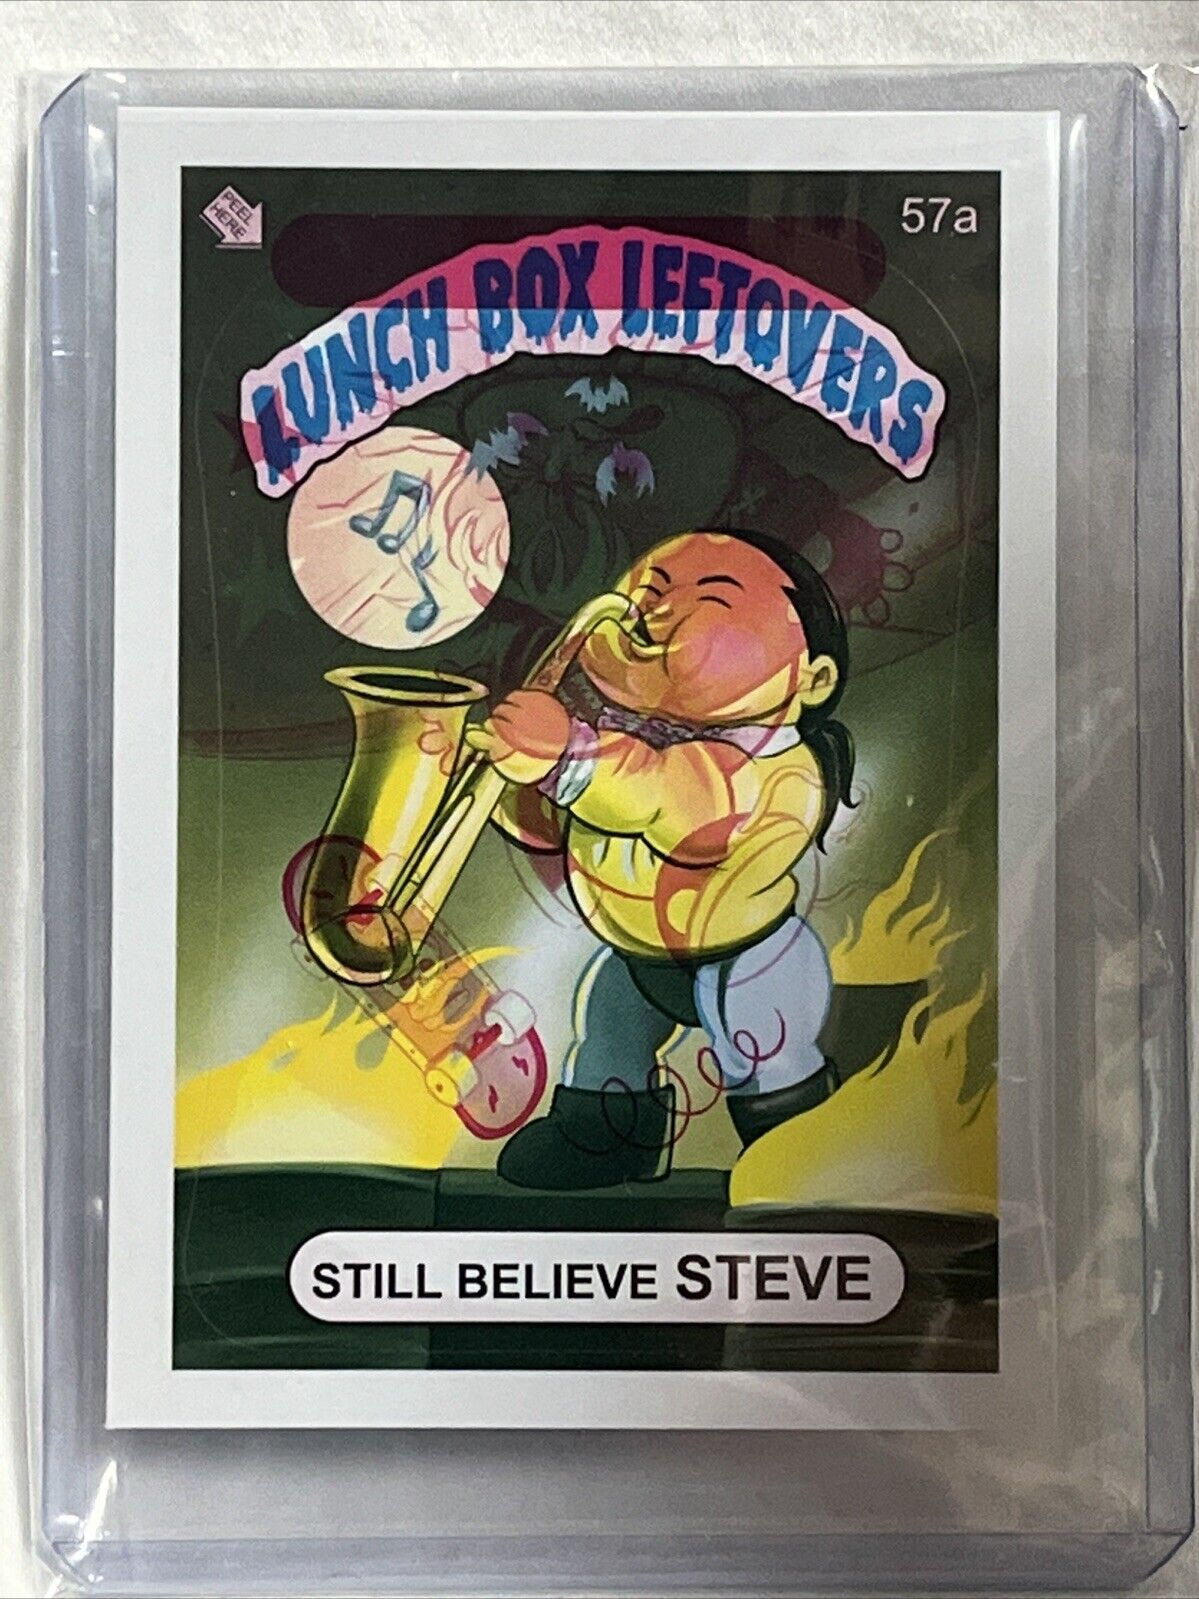 Rare SSFC Series 3 Lunchbox Leftovers Error Card #57a I Still Believe Steve